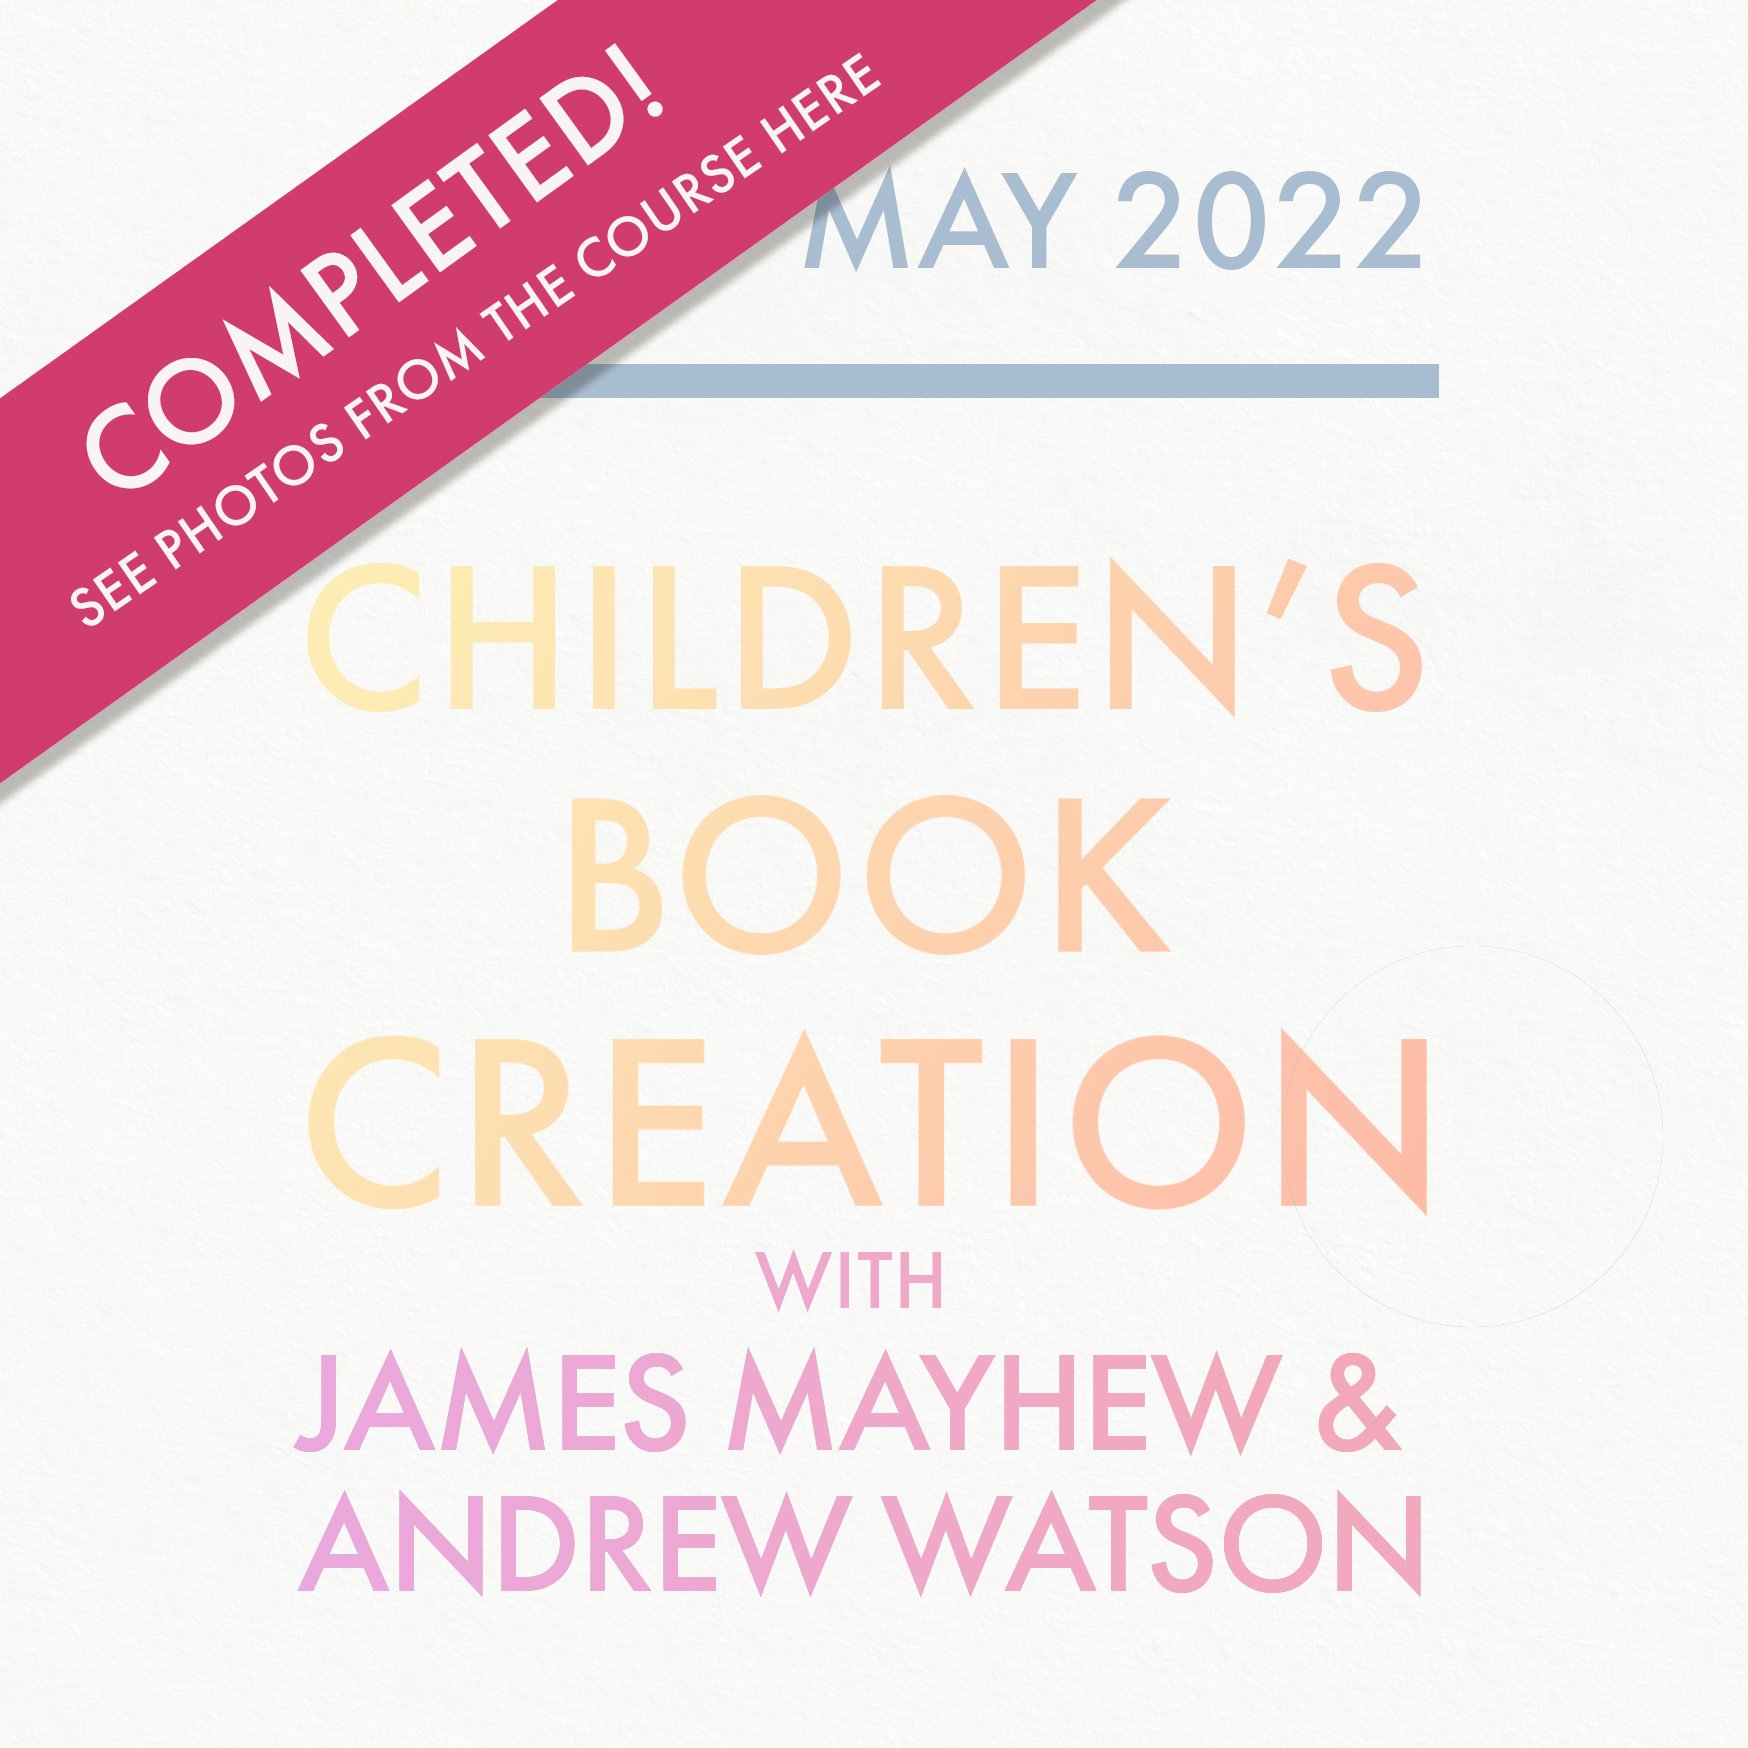 GC chldrens book creation 2022 COMPLETE.jpg